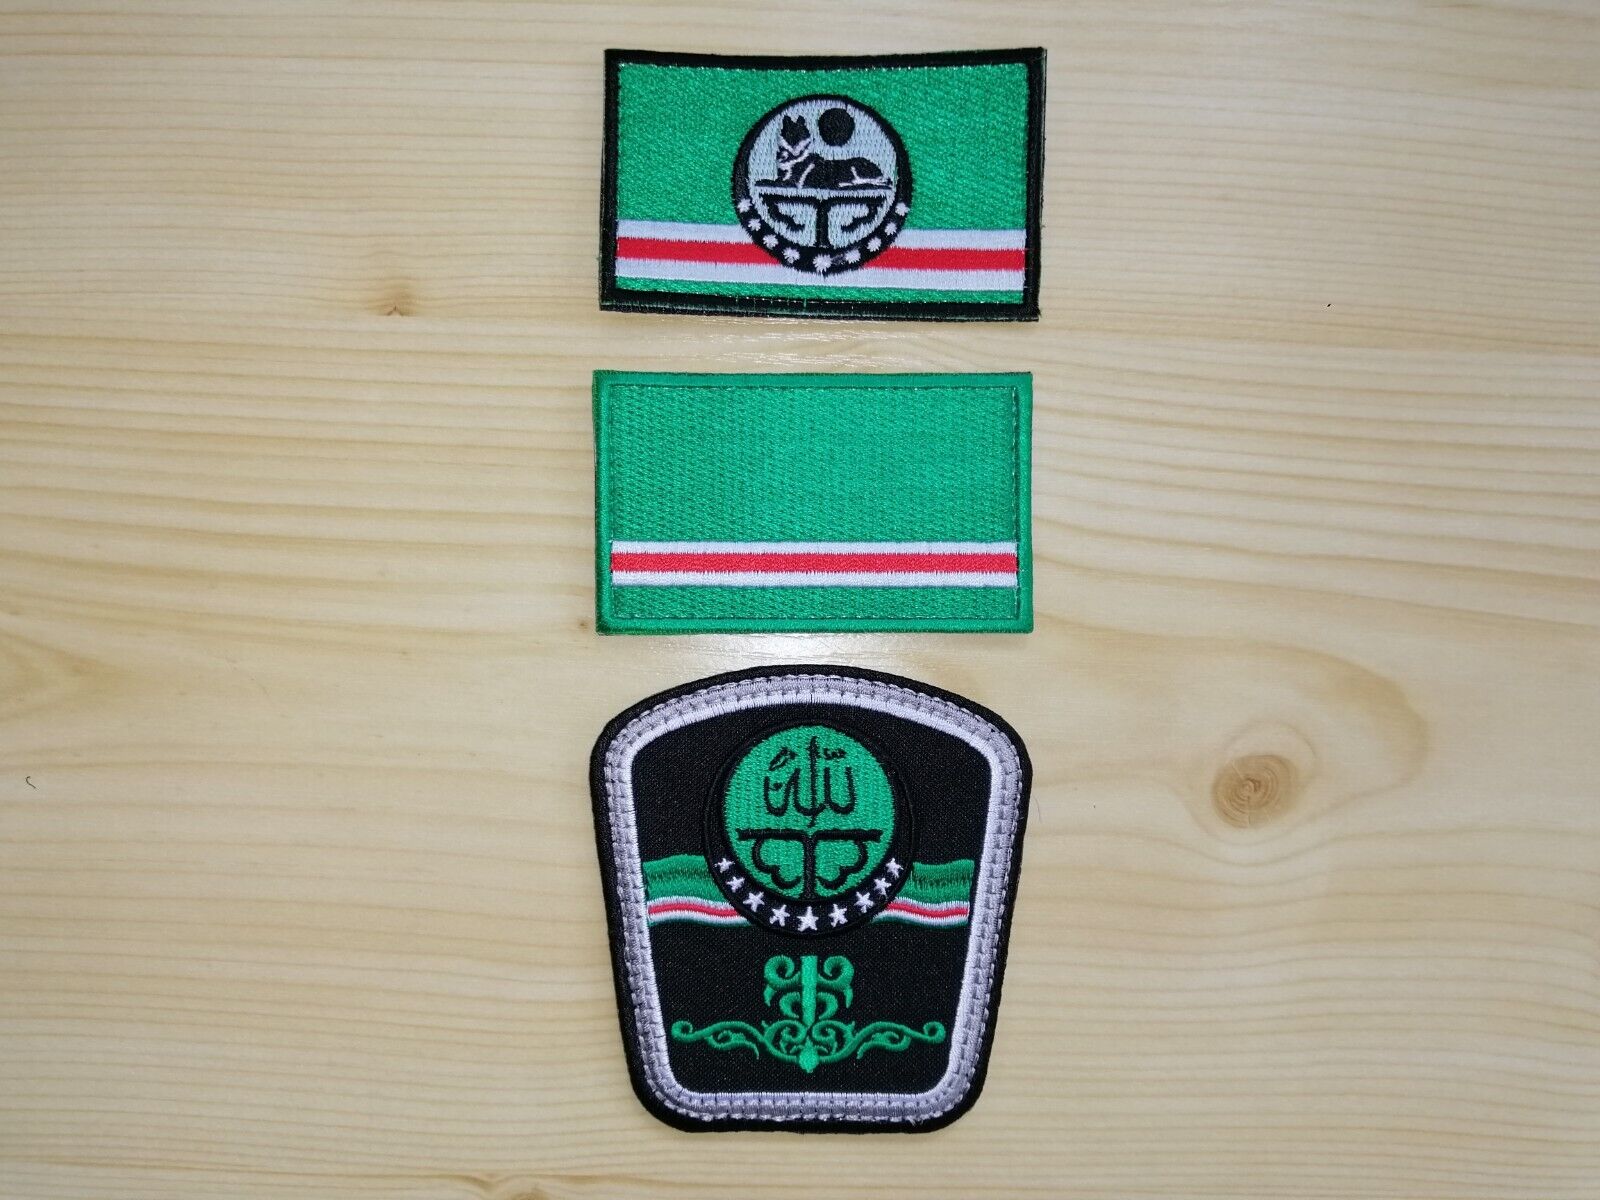 Chechen Republic of Ichkeria set of three embroidered patches UKRAINE PATCH